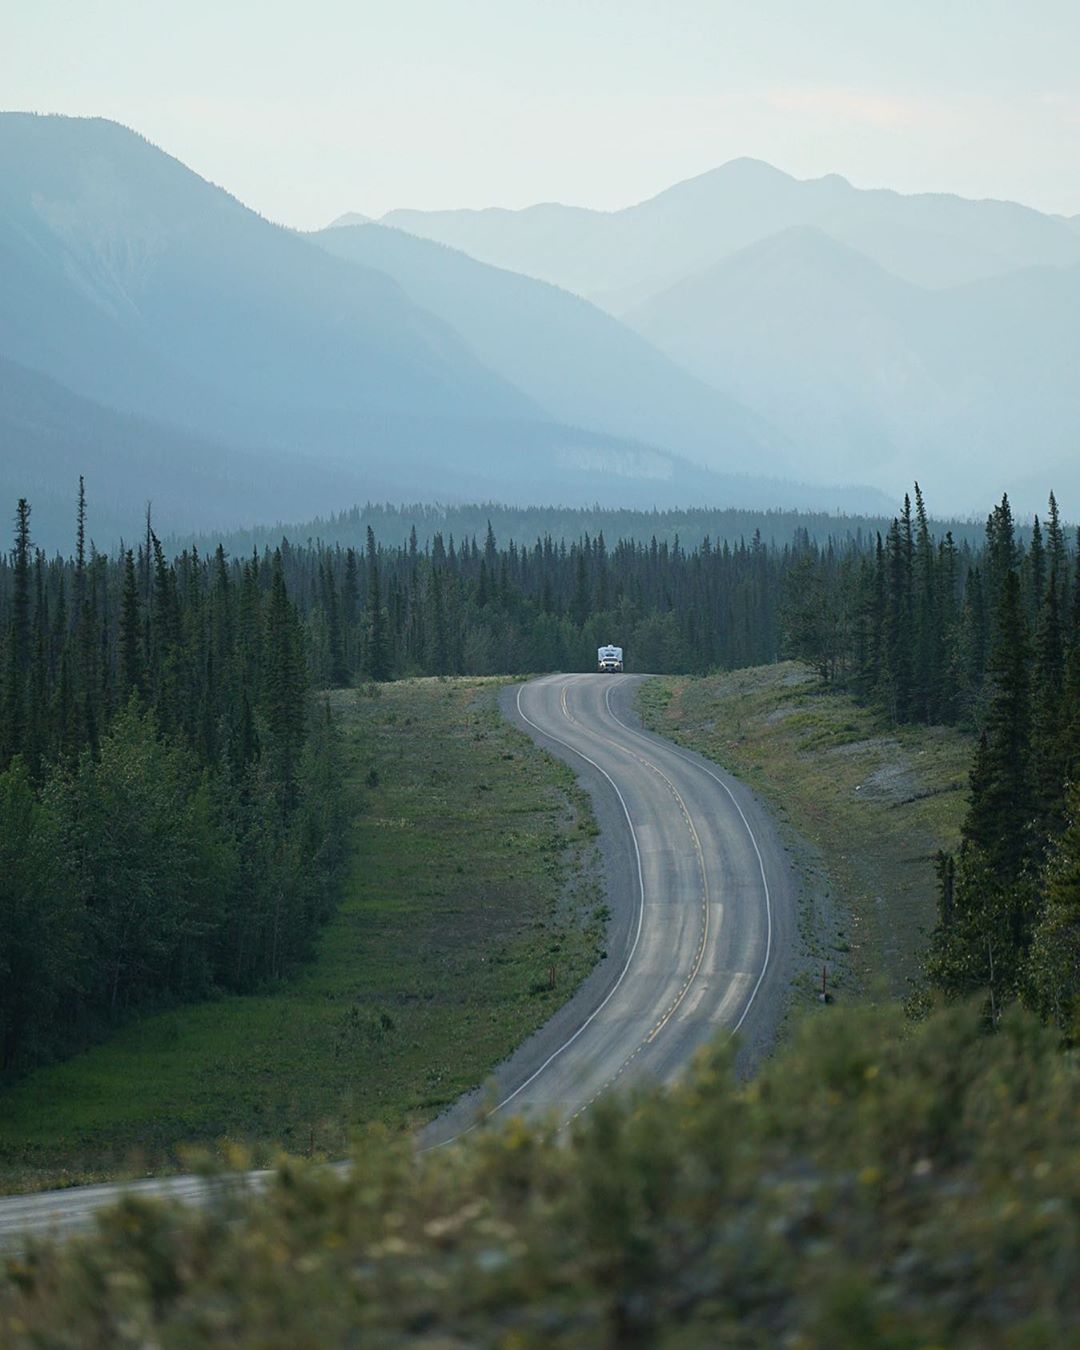 photo by Winter Hawk Studios caption reads: Summer nights on the Alaska Highway. #explorebc #travelnorthernbc #explorealaskahighway #explorecanada #explorenrrm #alaskahighway #muskwakechika